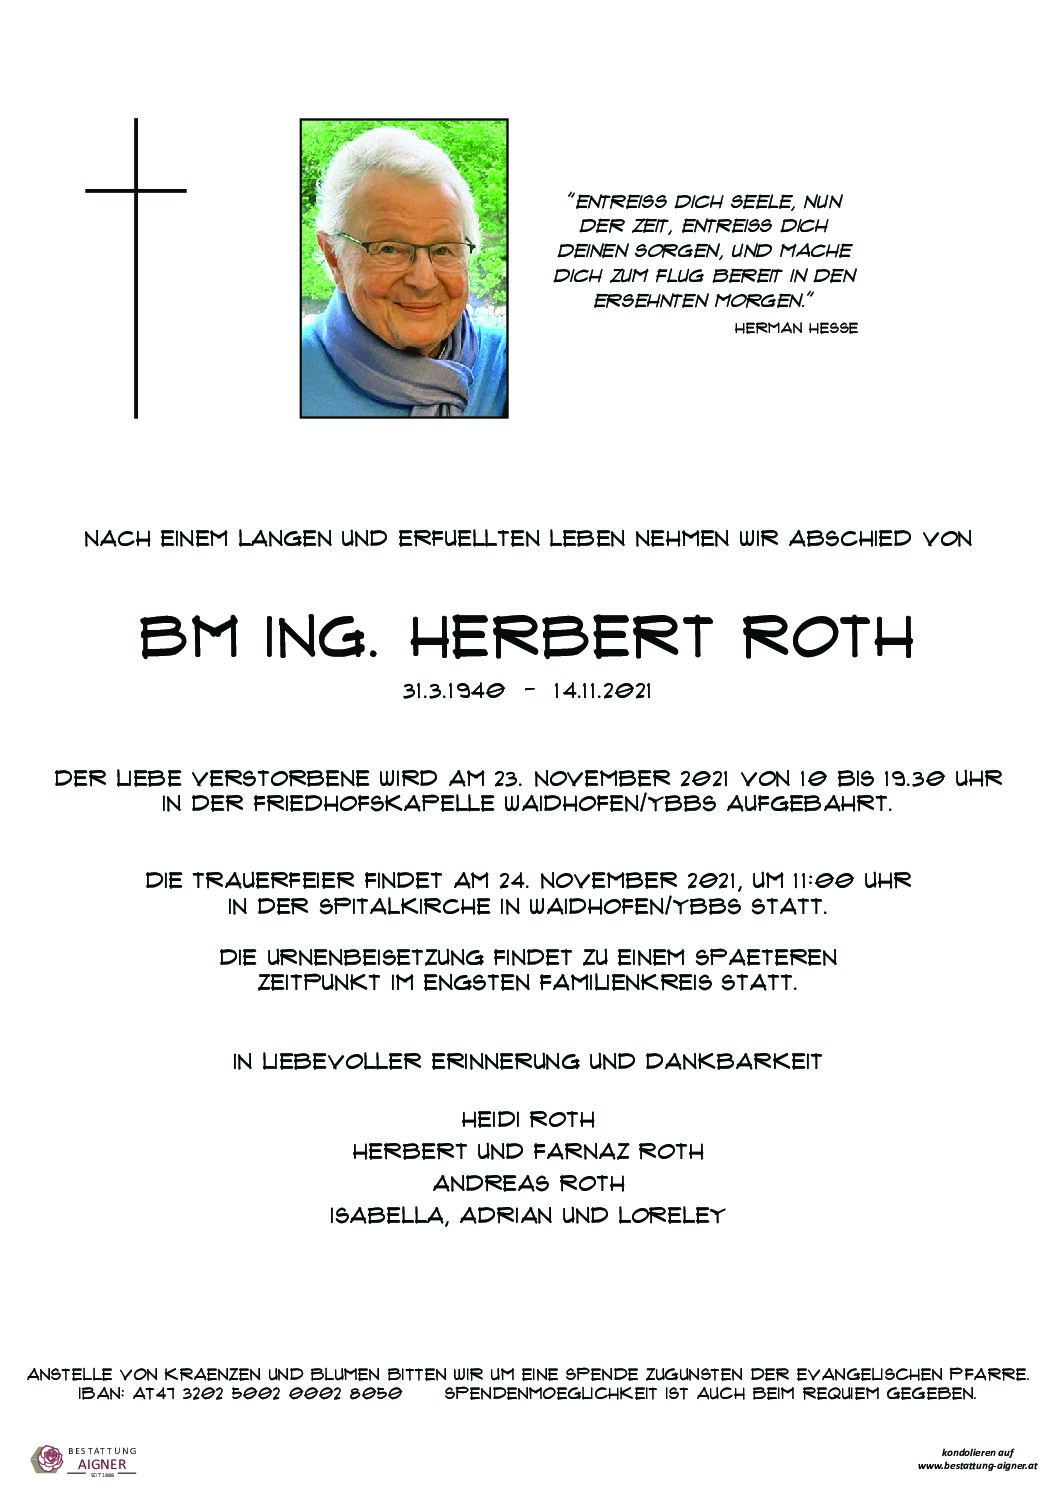 BM Ing. Herbert Roth